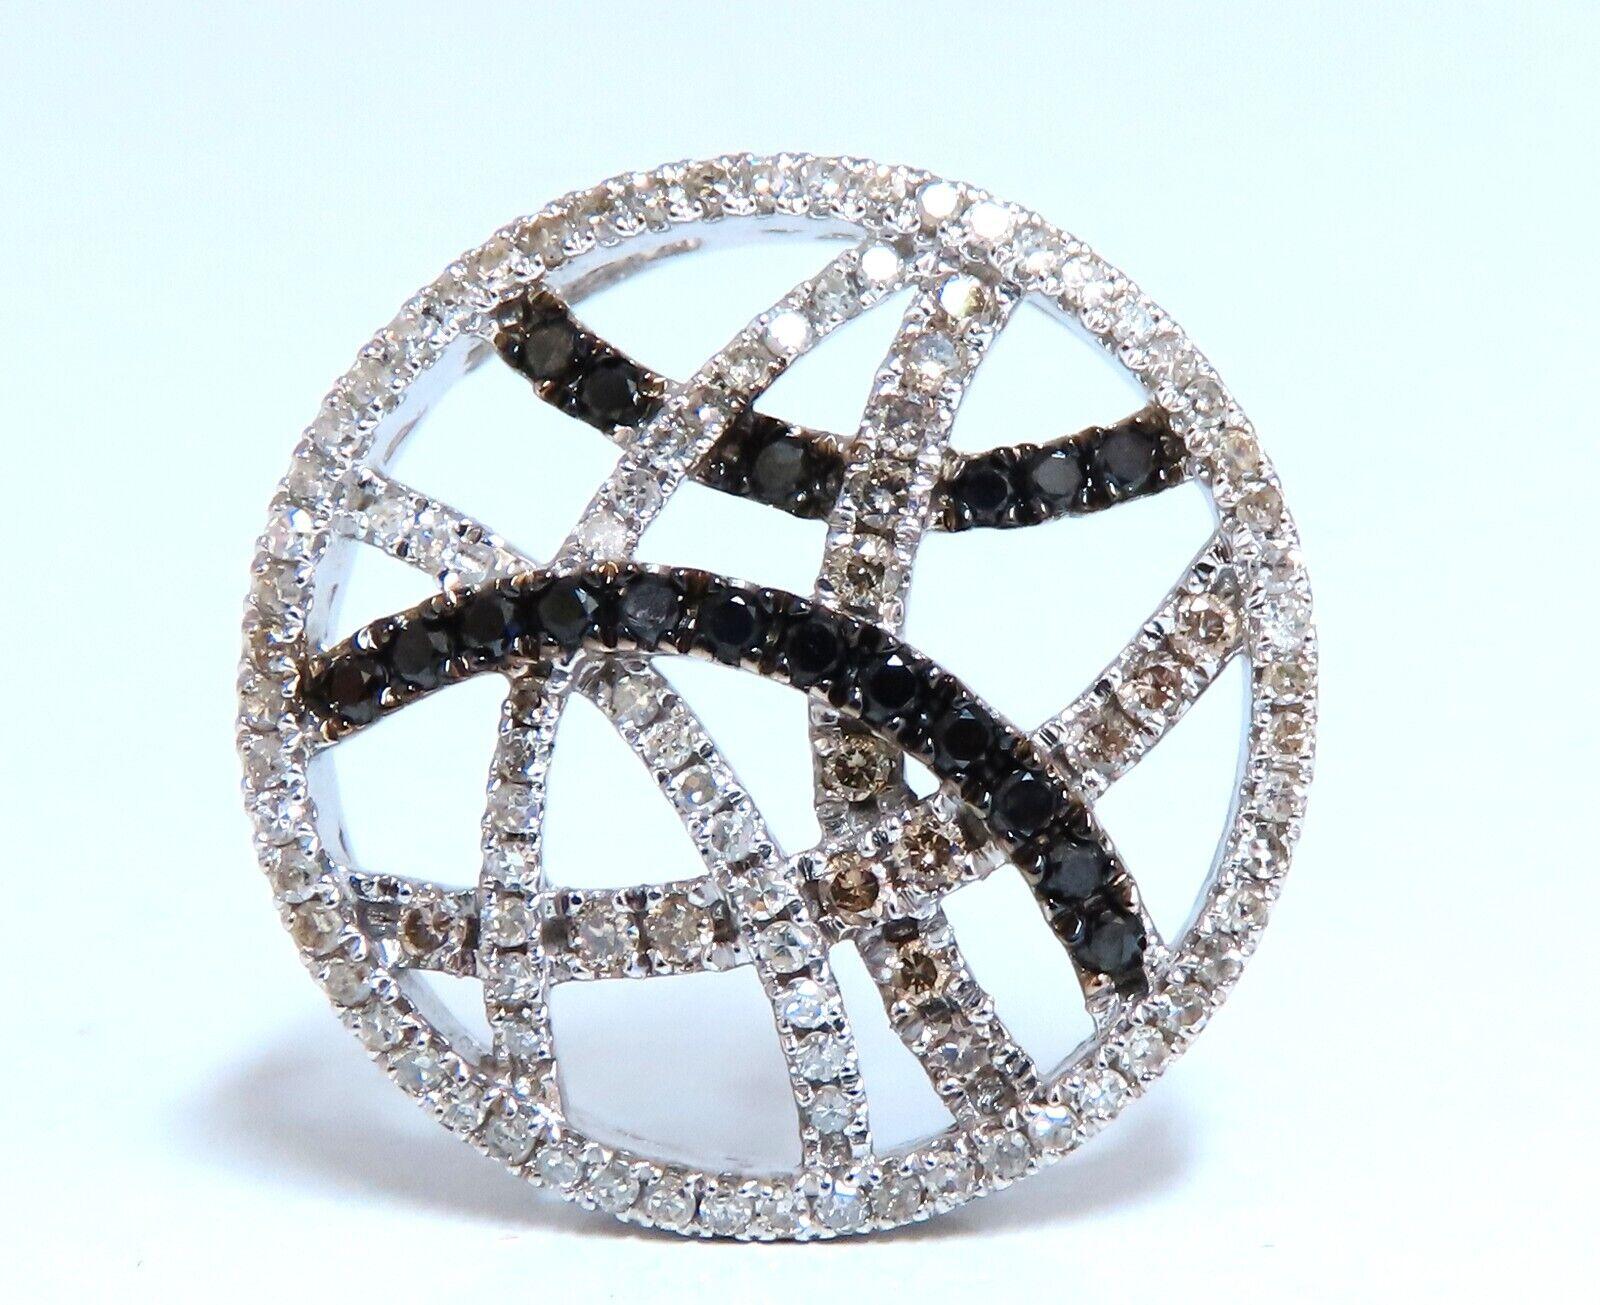 Cosmopolitan Circle Pendant

1.30ct natural diamonds.

Black and white.

Si-1 clarity / I color

14kt. White gold 

23mm circle diameter

4.7 grams.